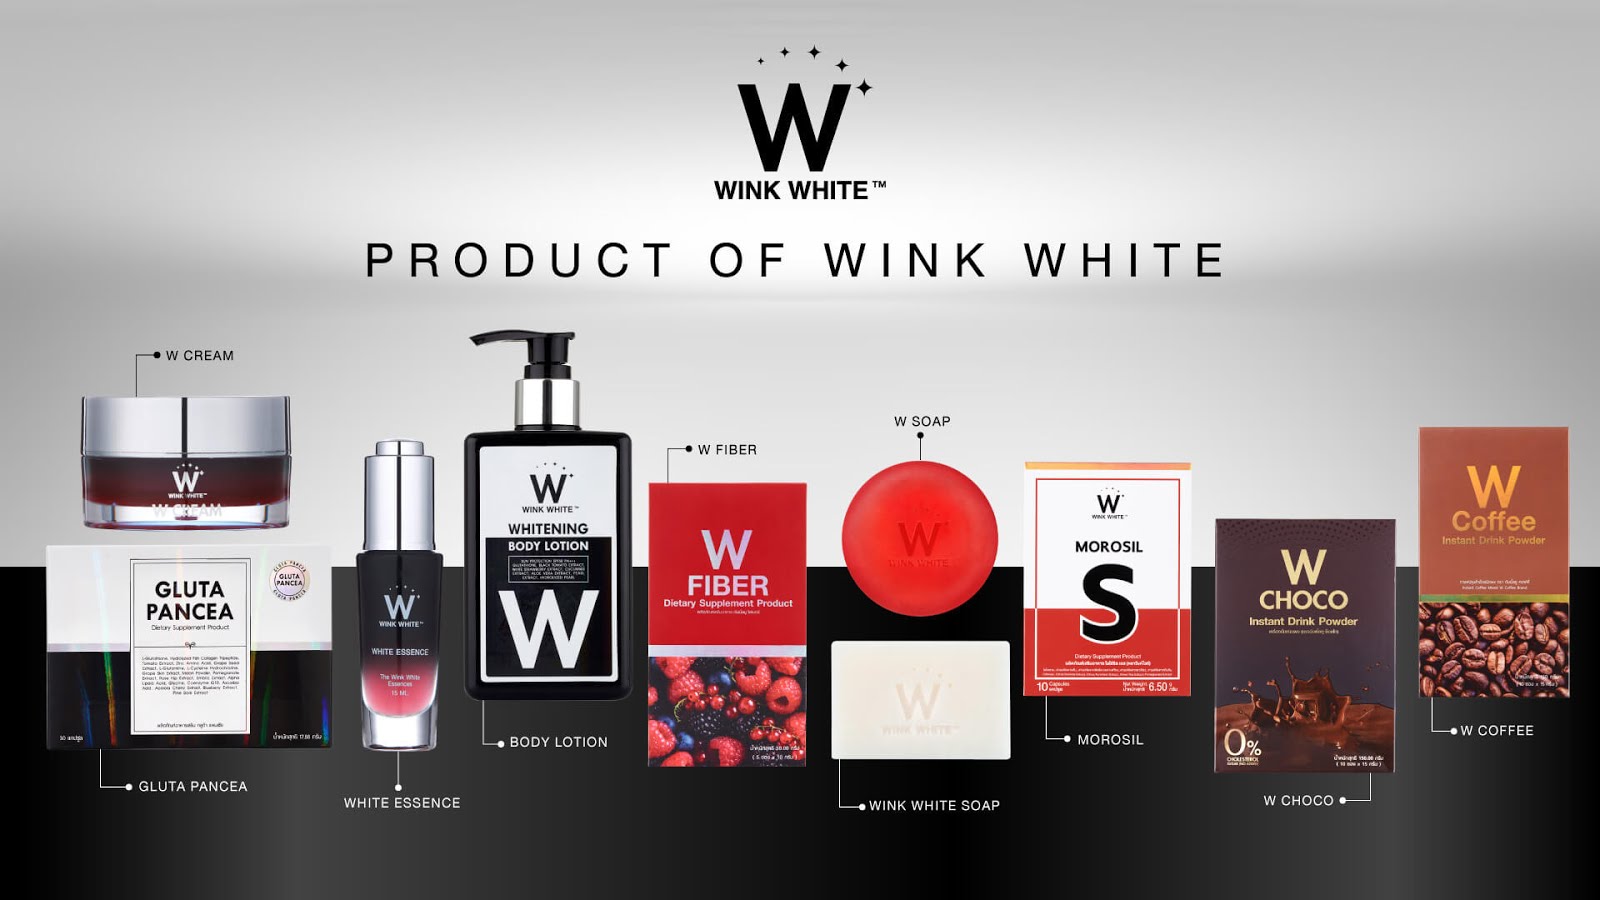 Wink White Pancea จำหน่ายผลิตภัณฑ์วิงค์ไวท์ของแท้ 100%